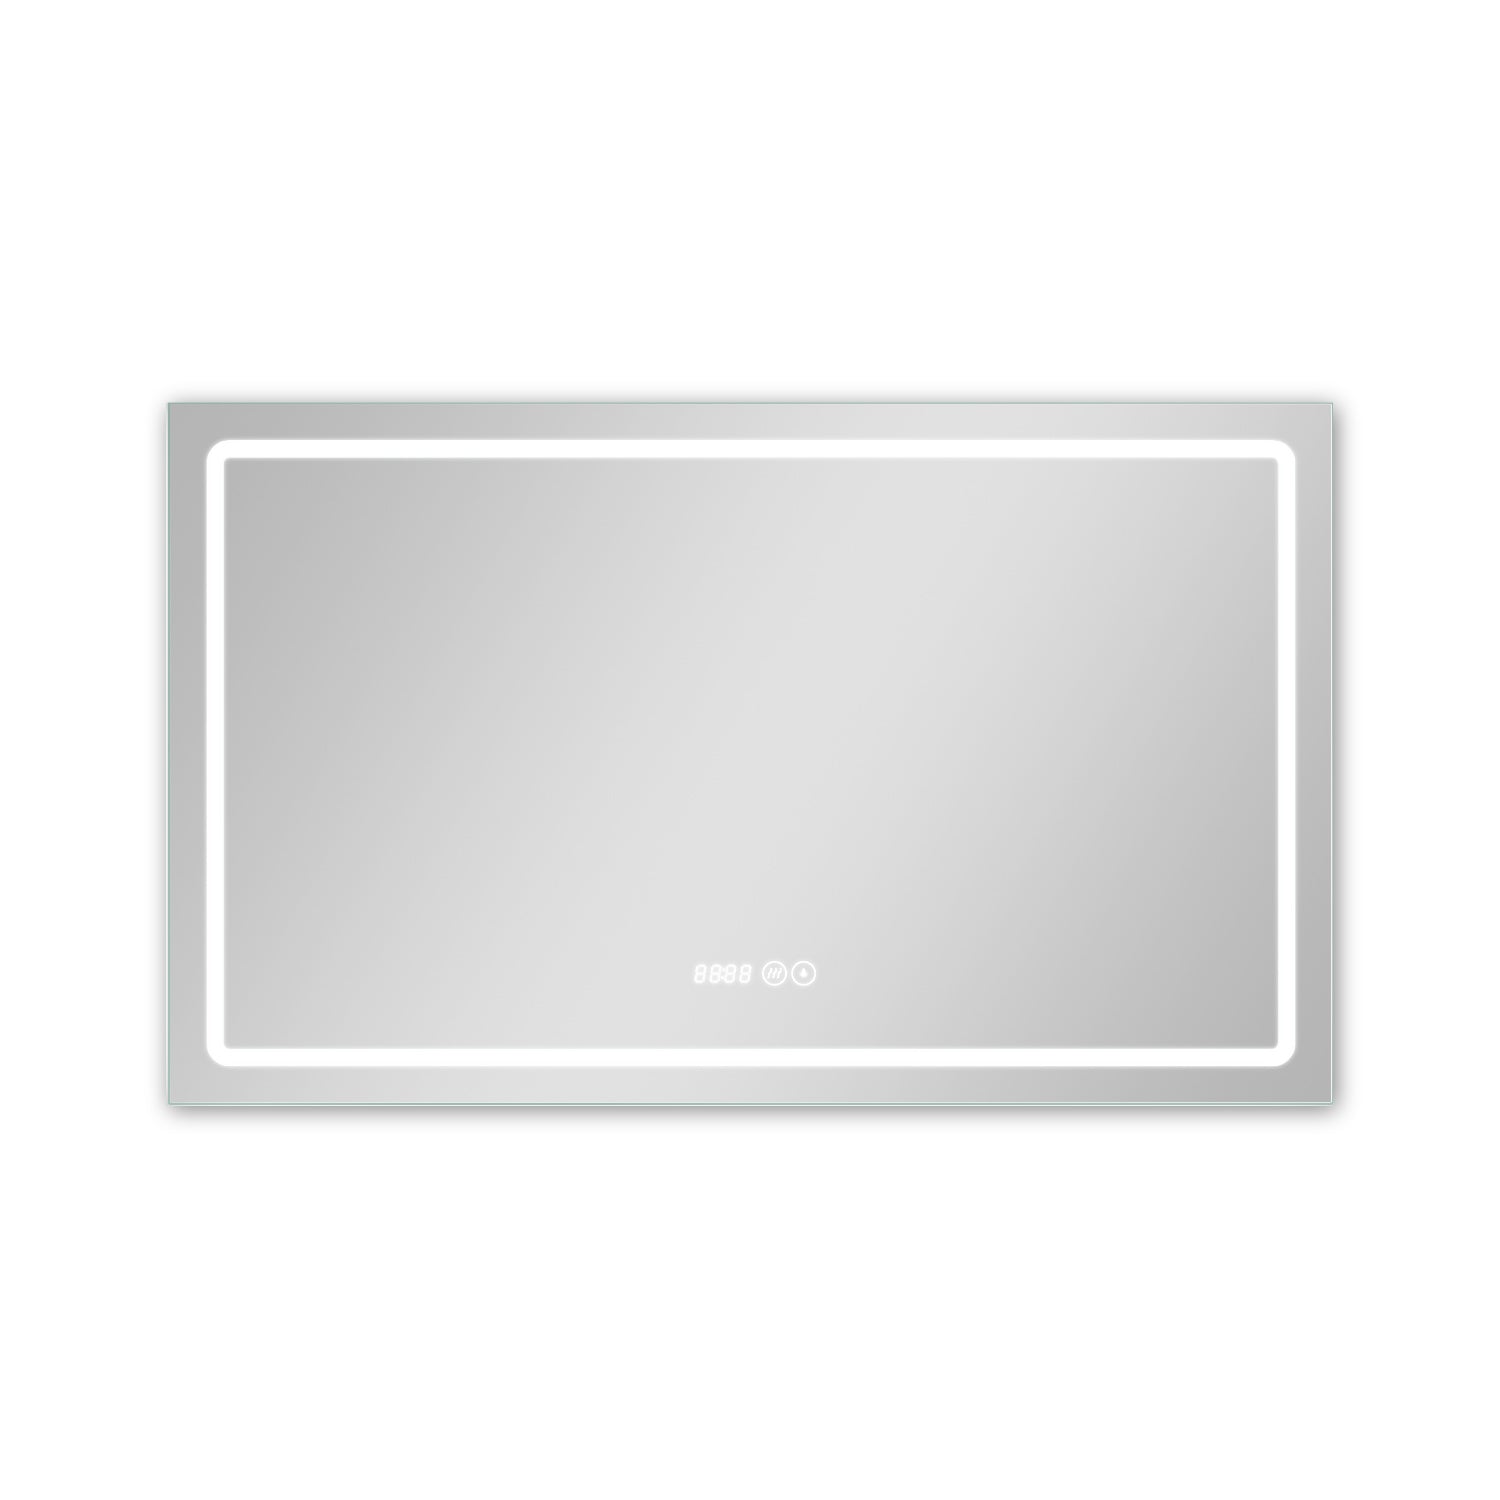 ANTI-FOG large LED bathroom mirror 100x60 cm.  DIGITAL CLOCK. XL bathroom mirror + touch switch + LED change - warm white - cool white - neutral